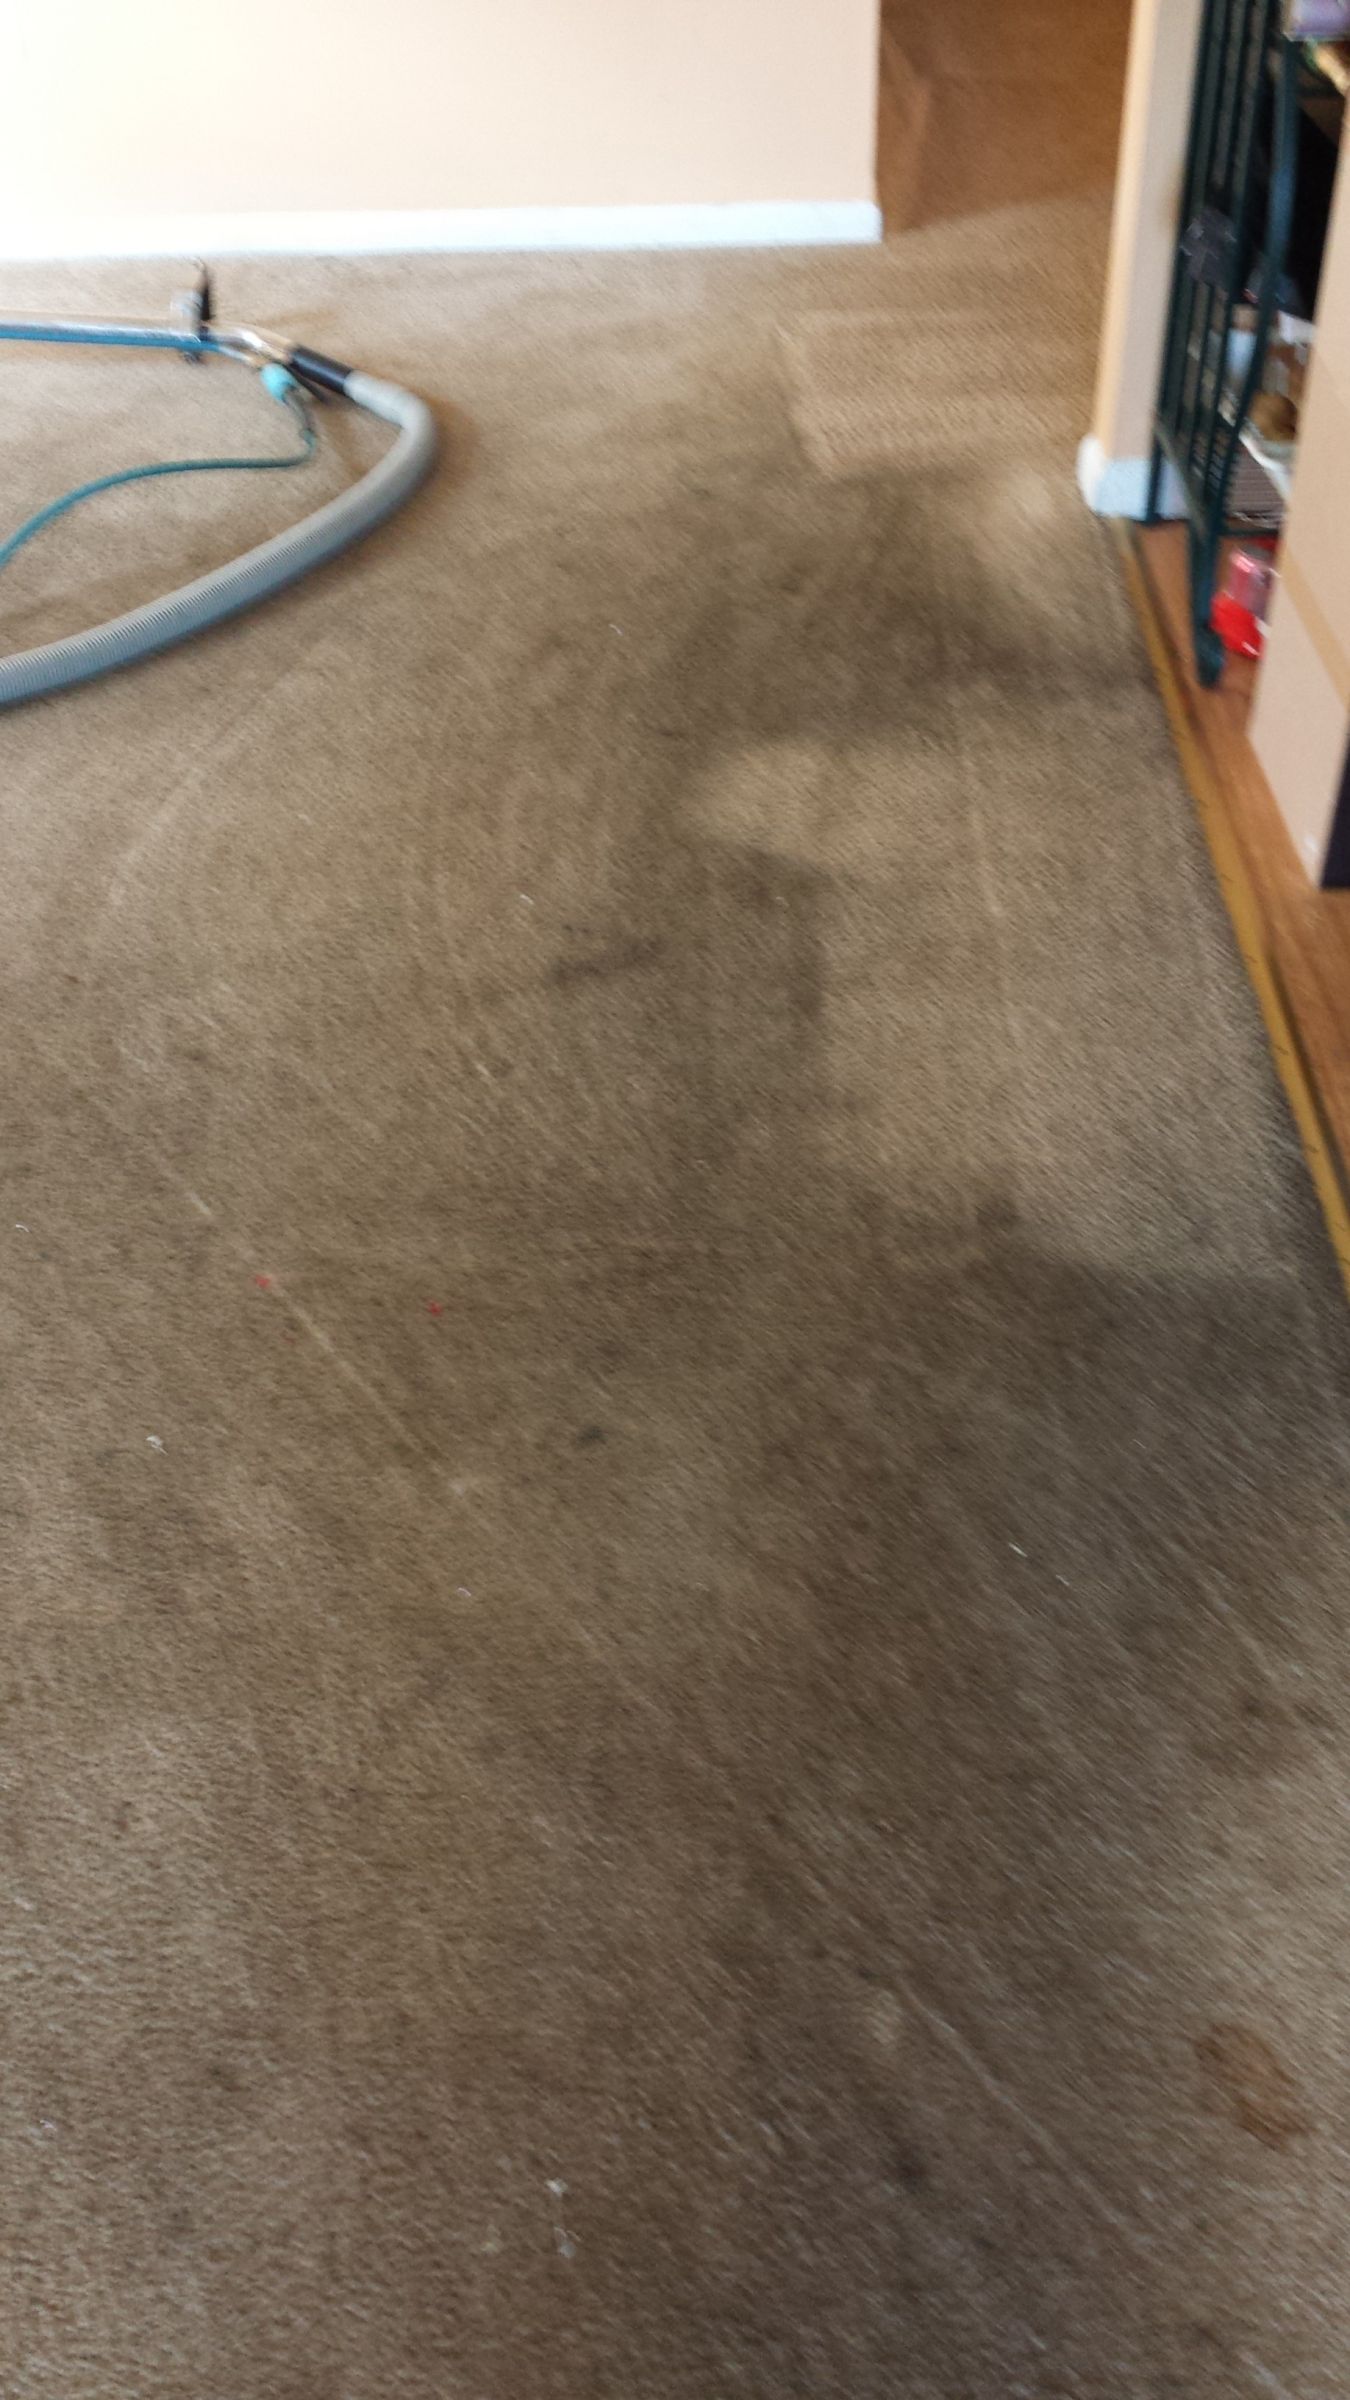 Haddonfield Carpet Cleaning